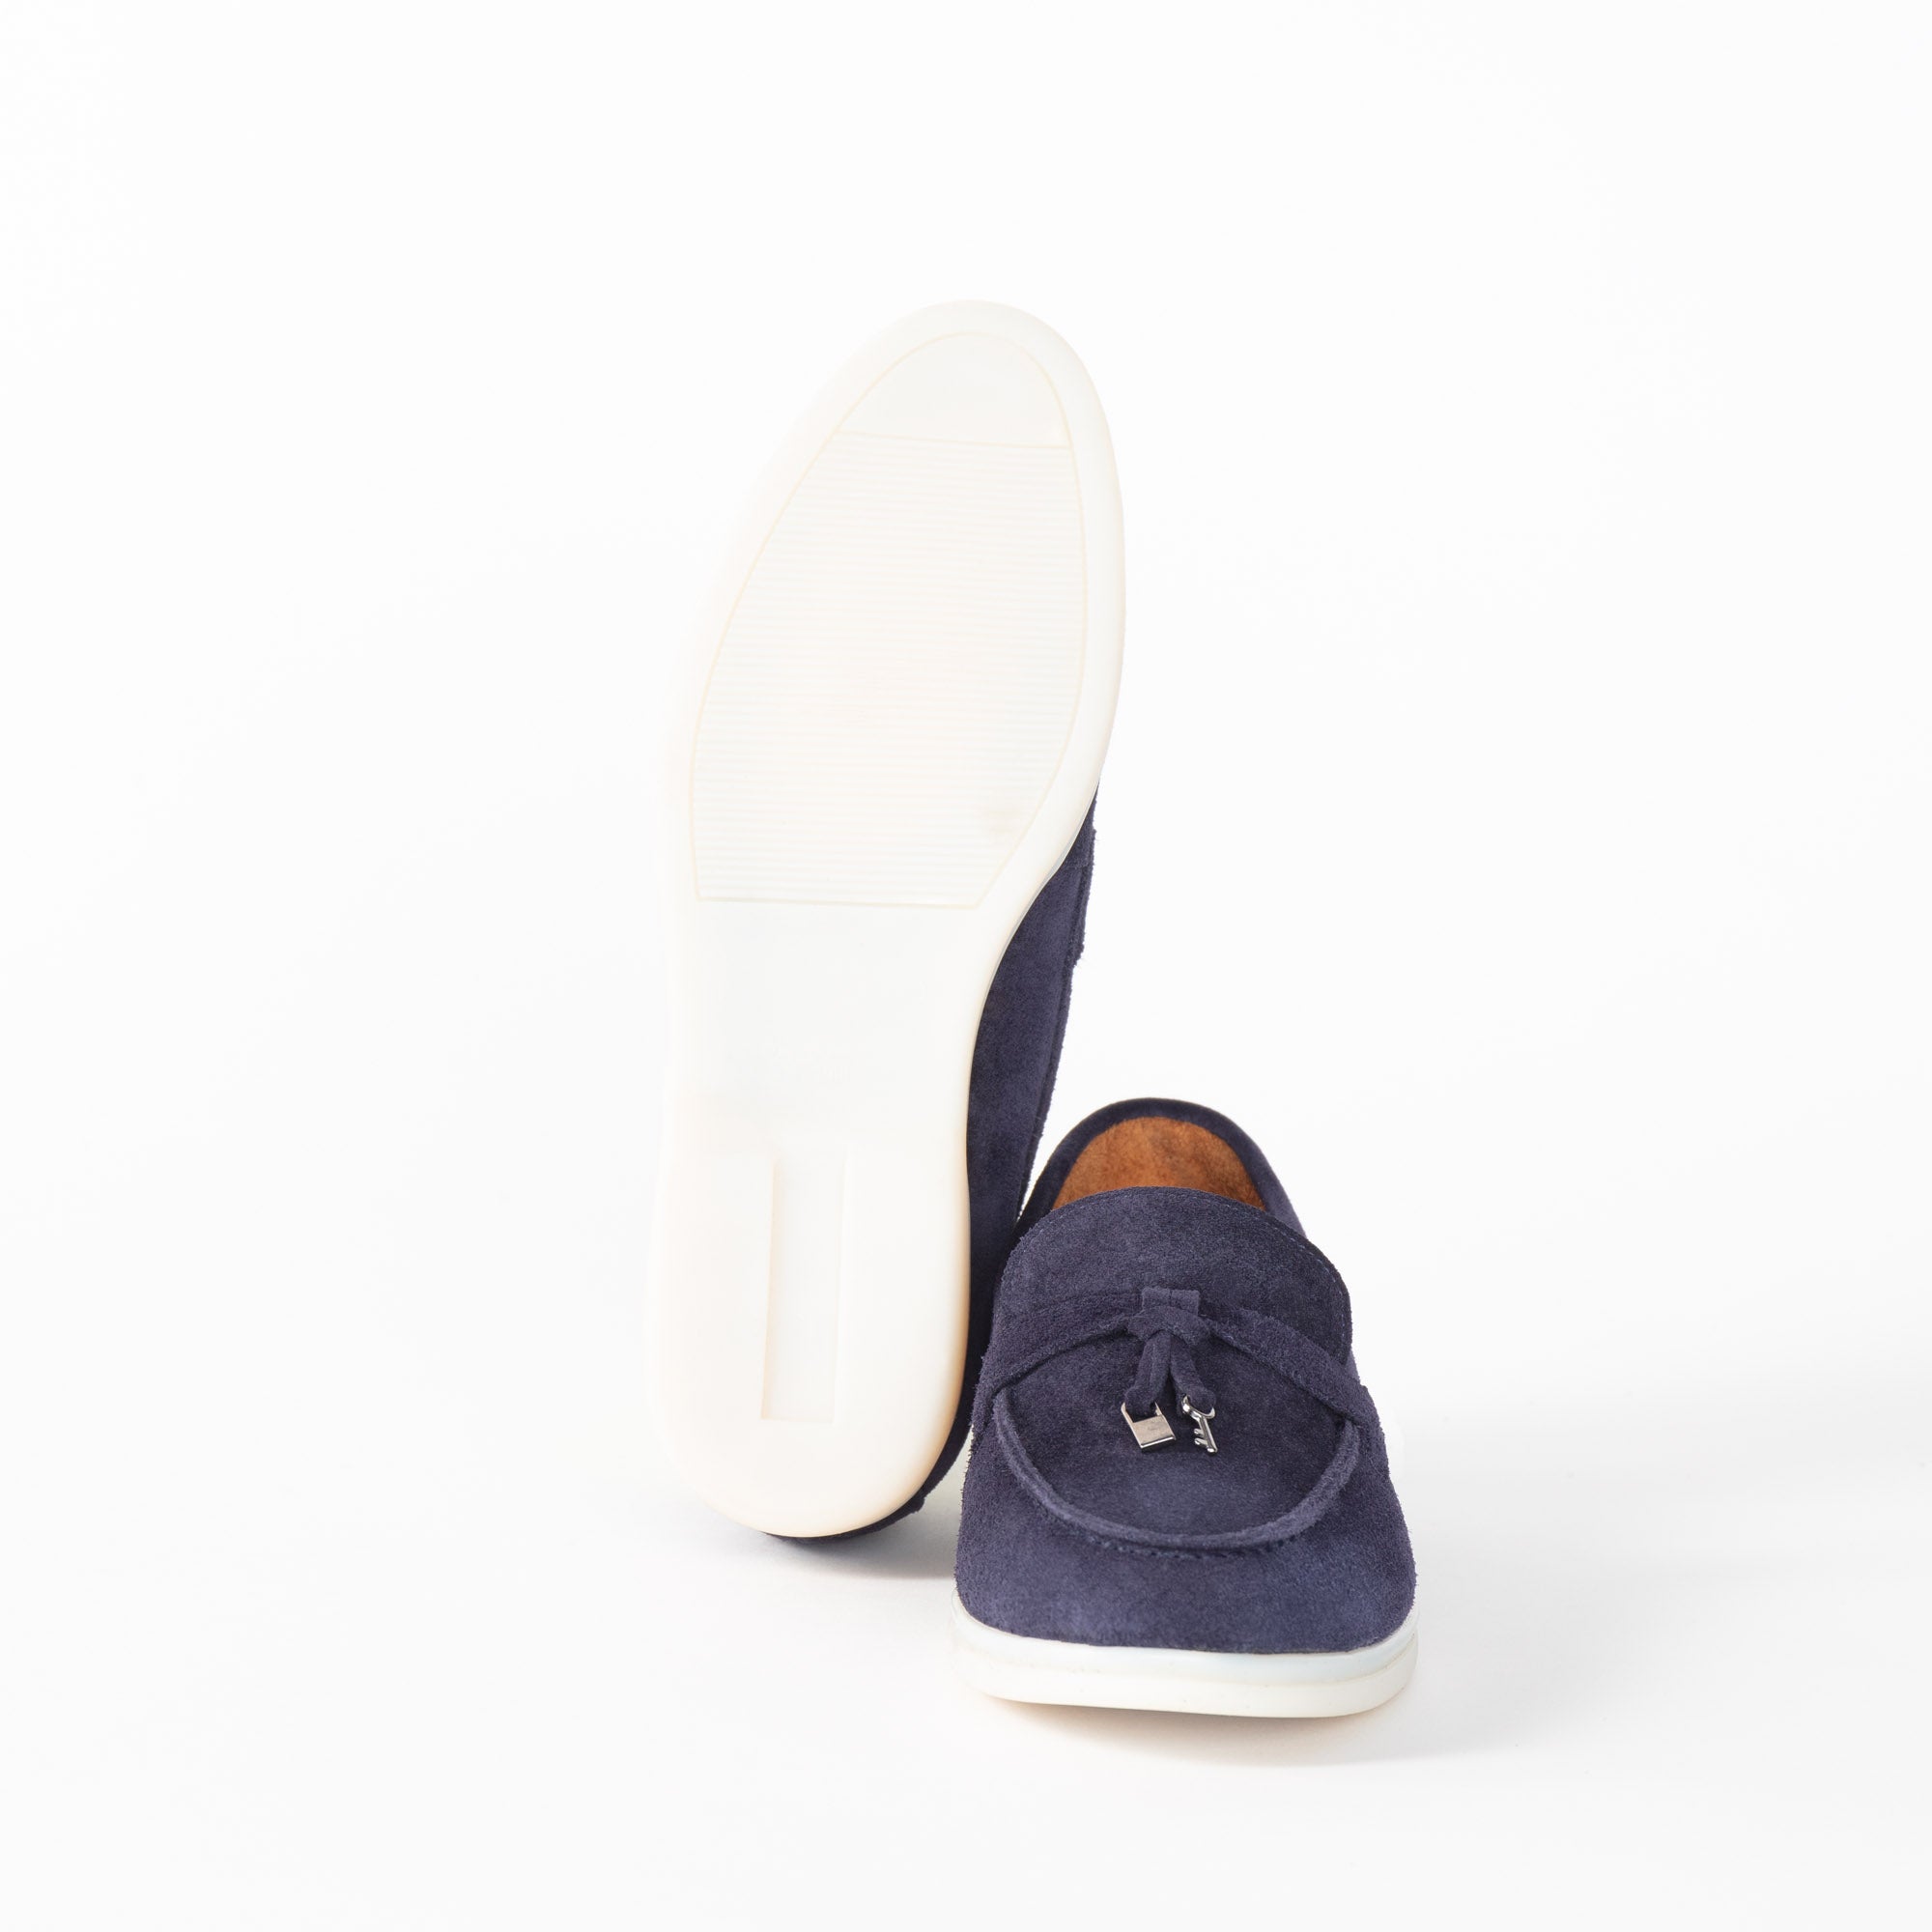 Loafers Damen Blau - Michael & Albina Exklusive Schuhe - Online Shop